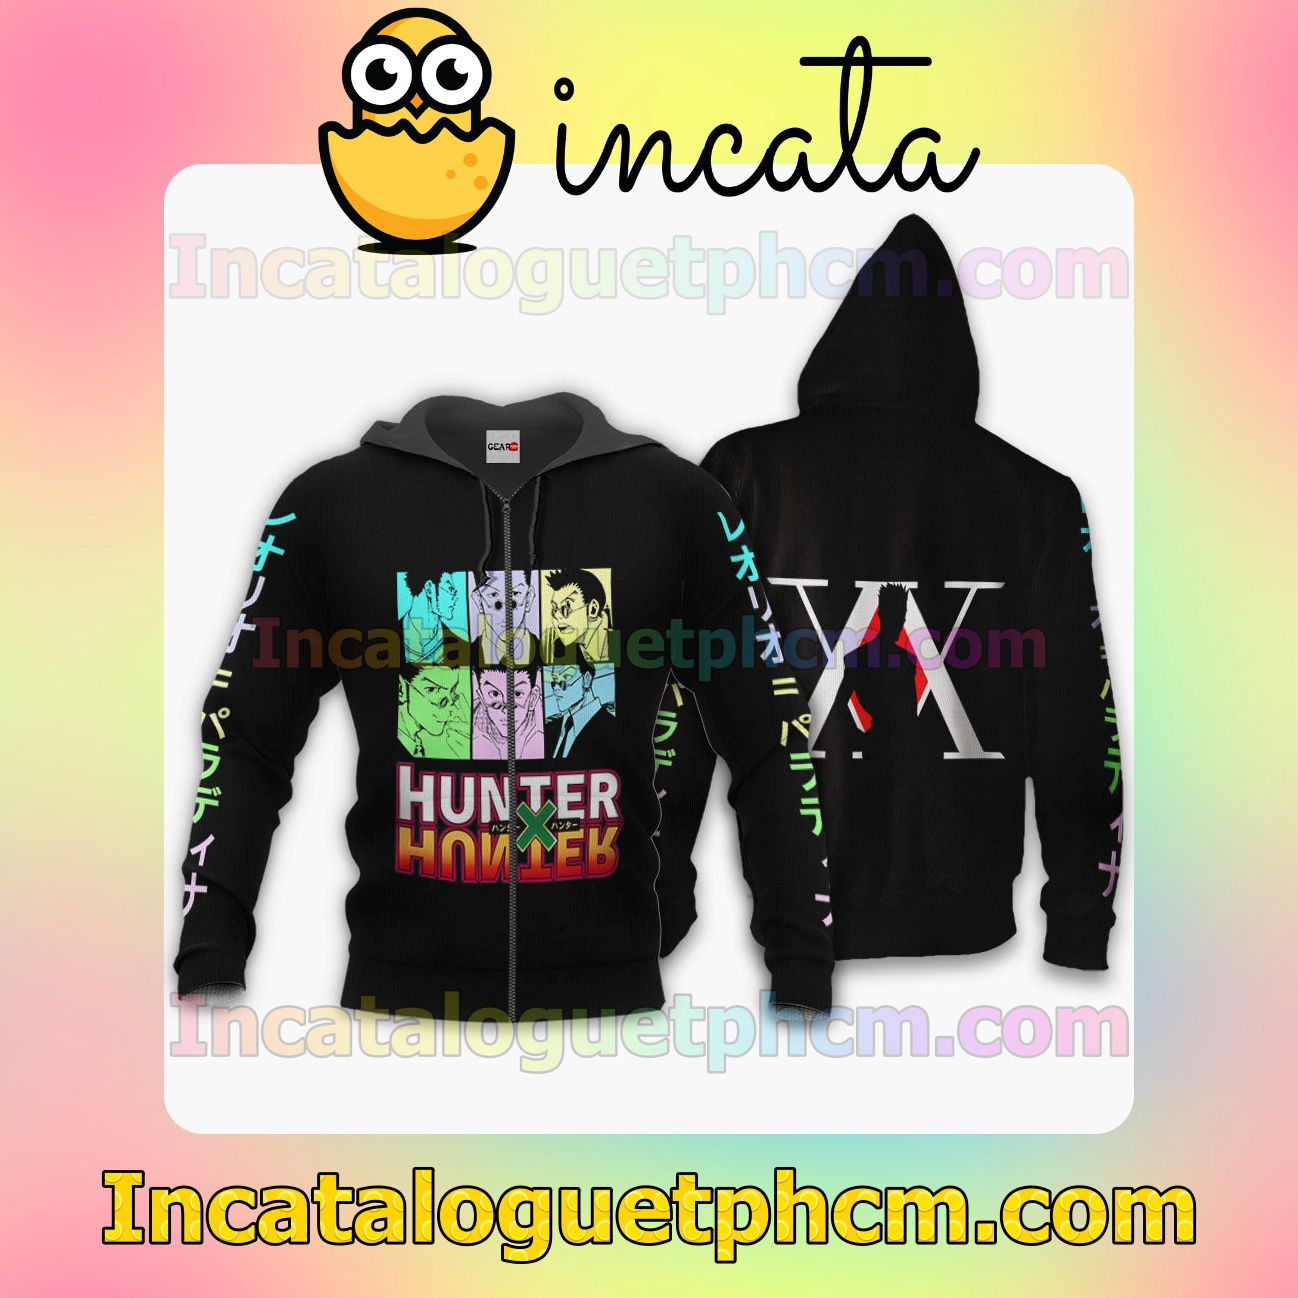 Leorio Paladiknight Hunter x Hunter Anime Style Clothing Merch Zip Hoodie Jacket Shirts